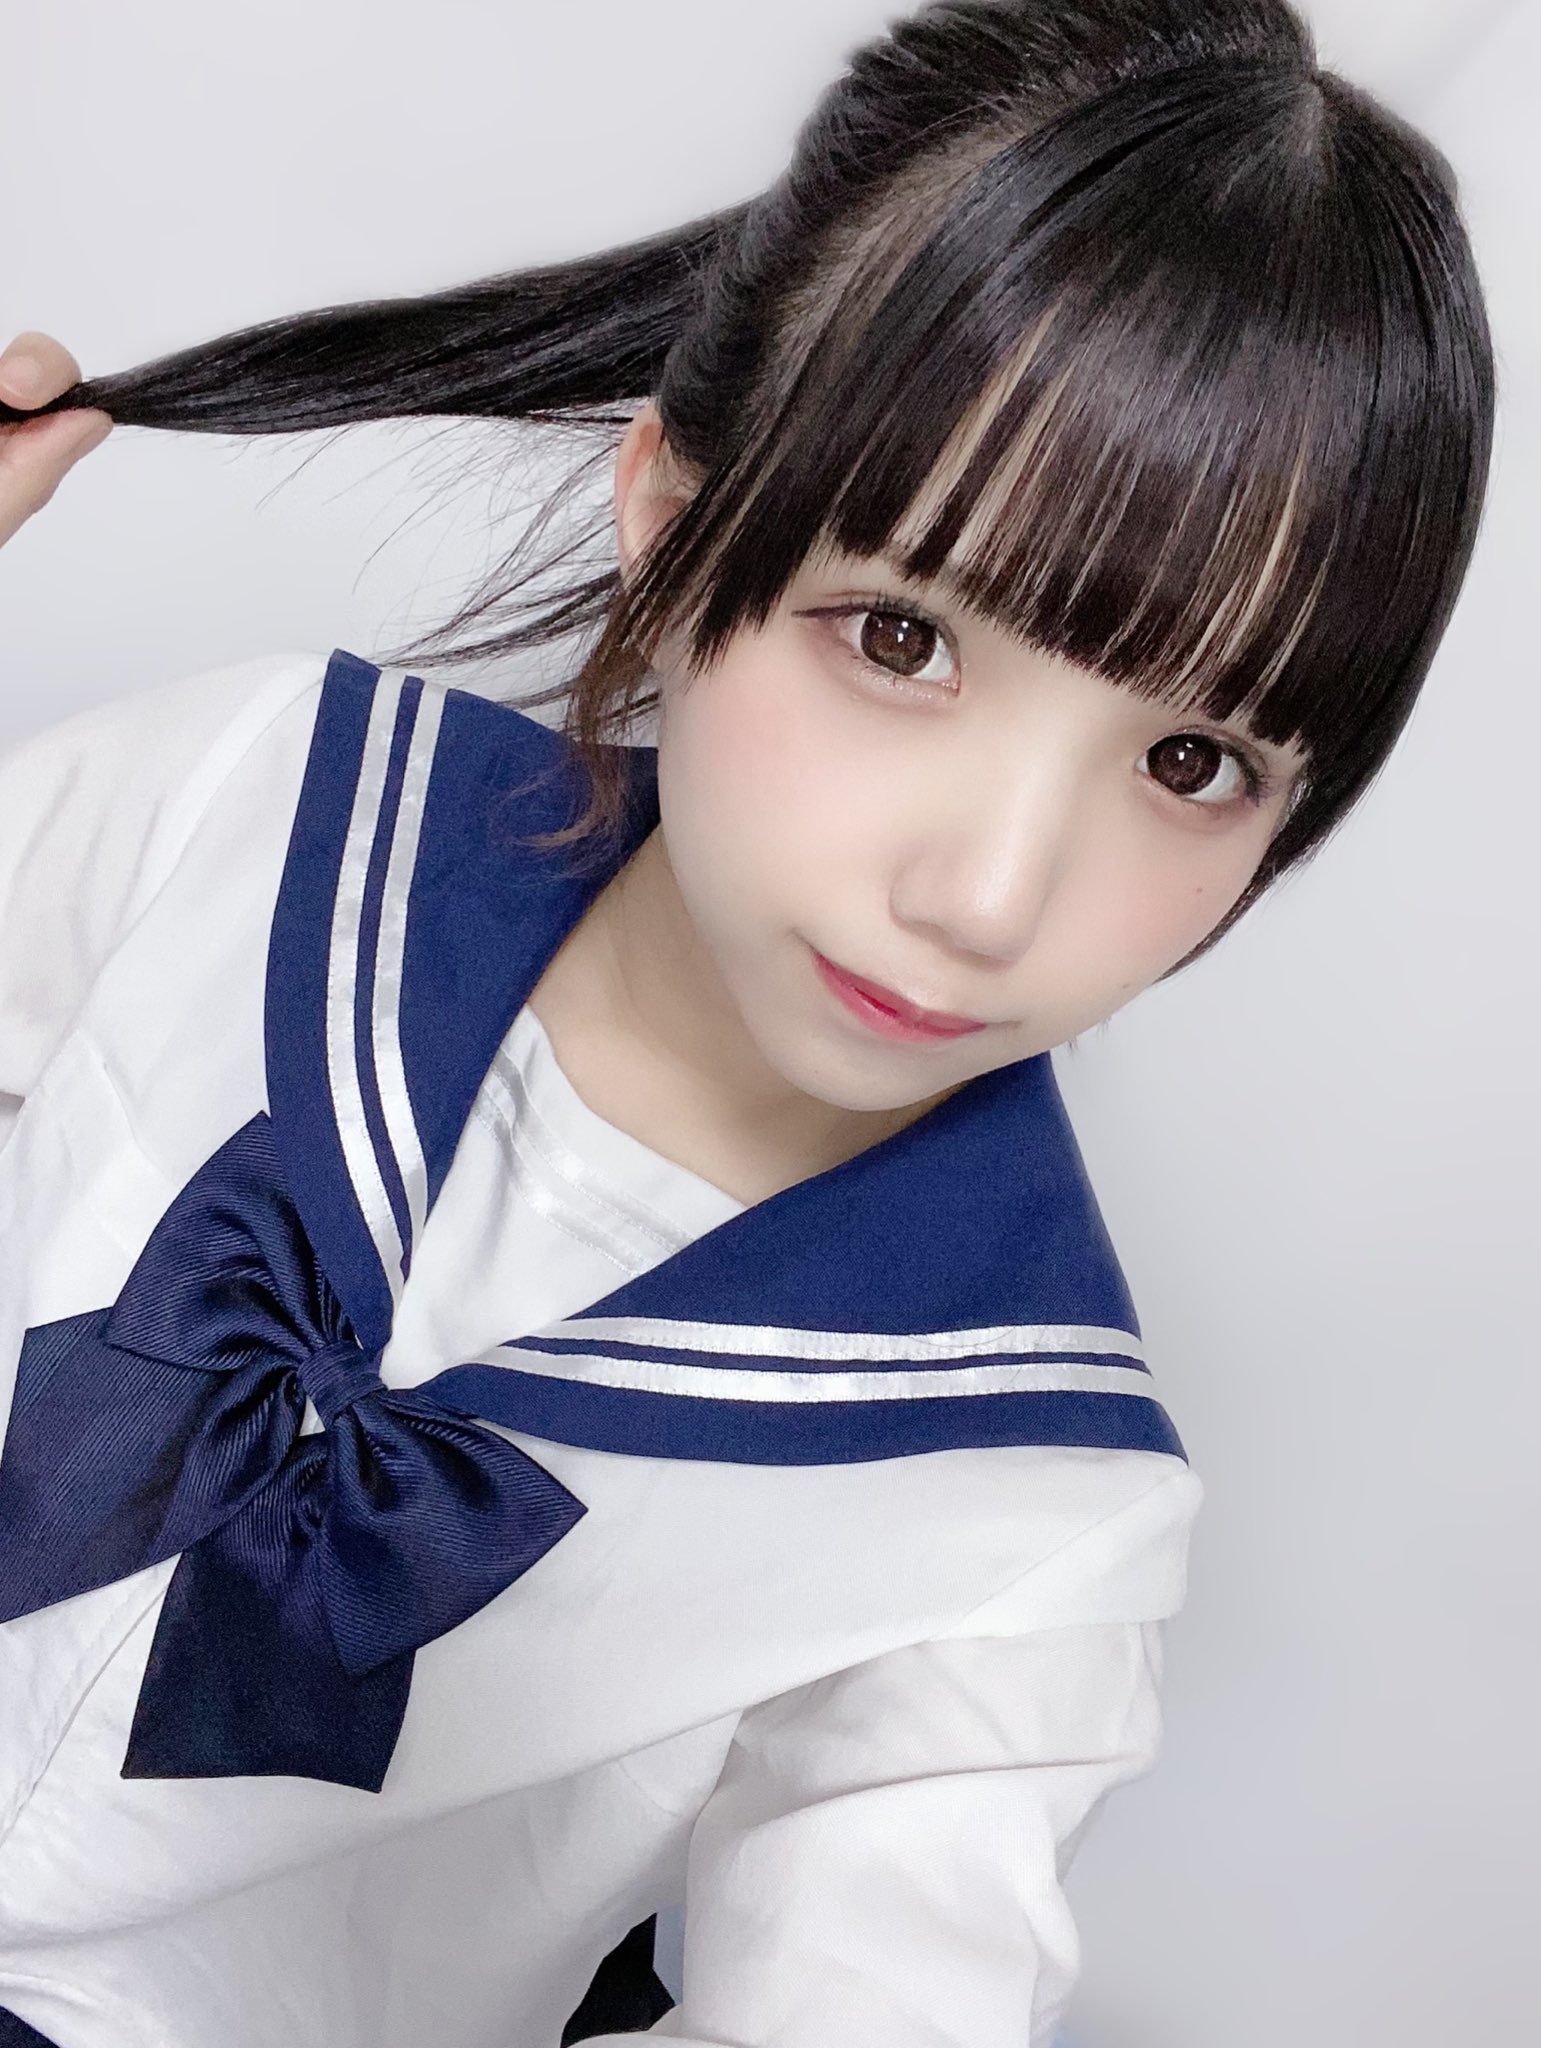 A-Pop Idols | Tachibana Haruka